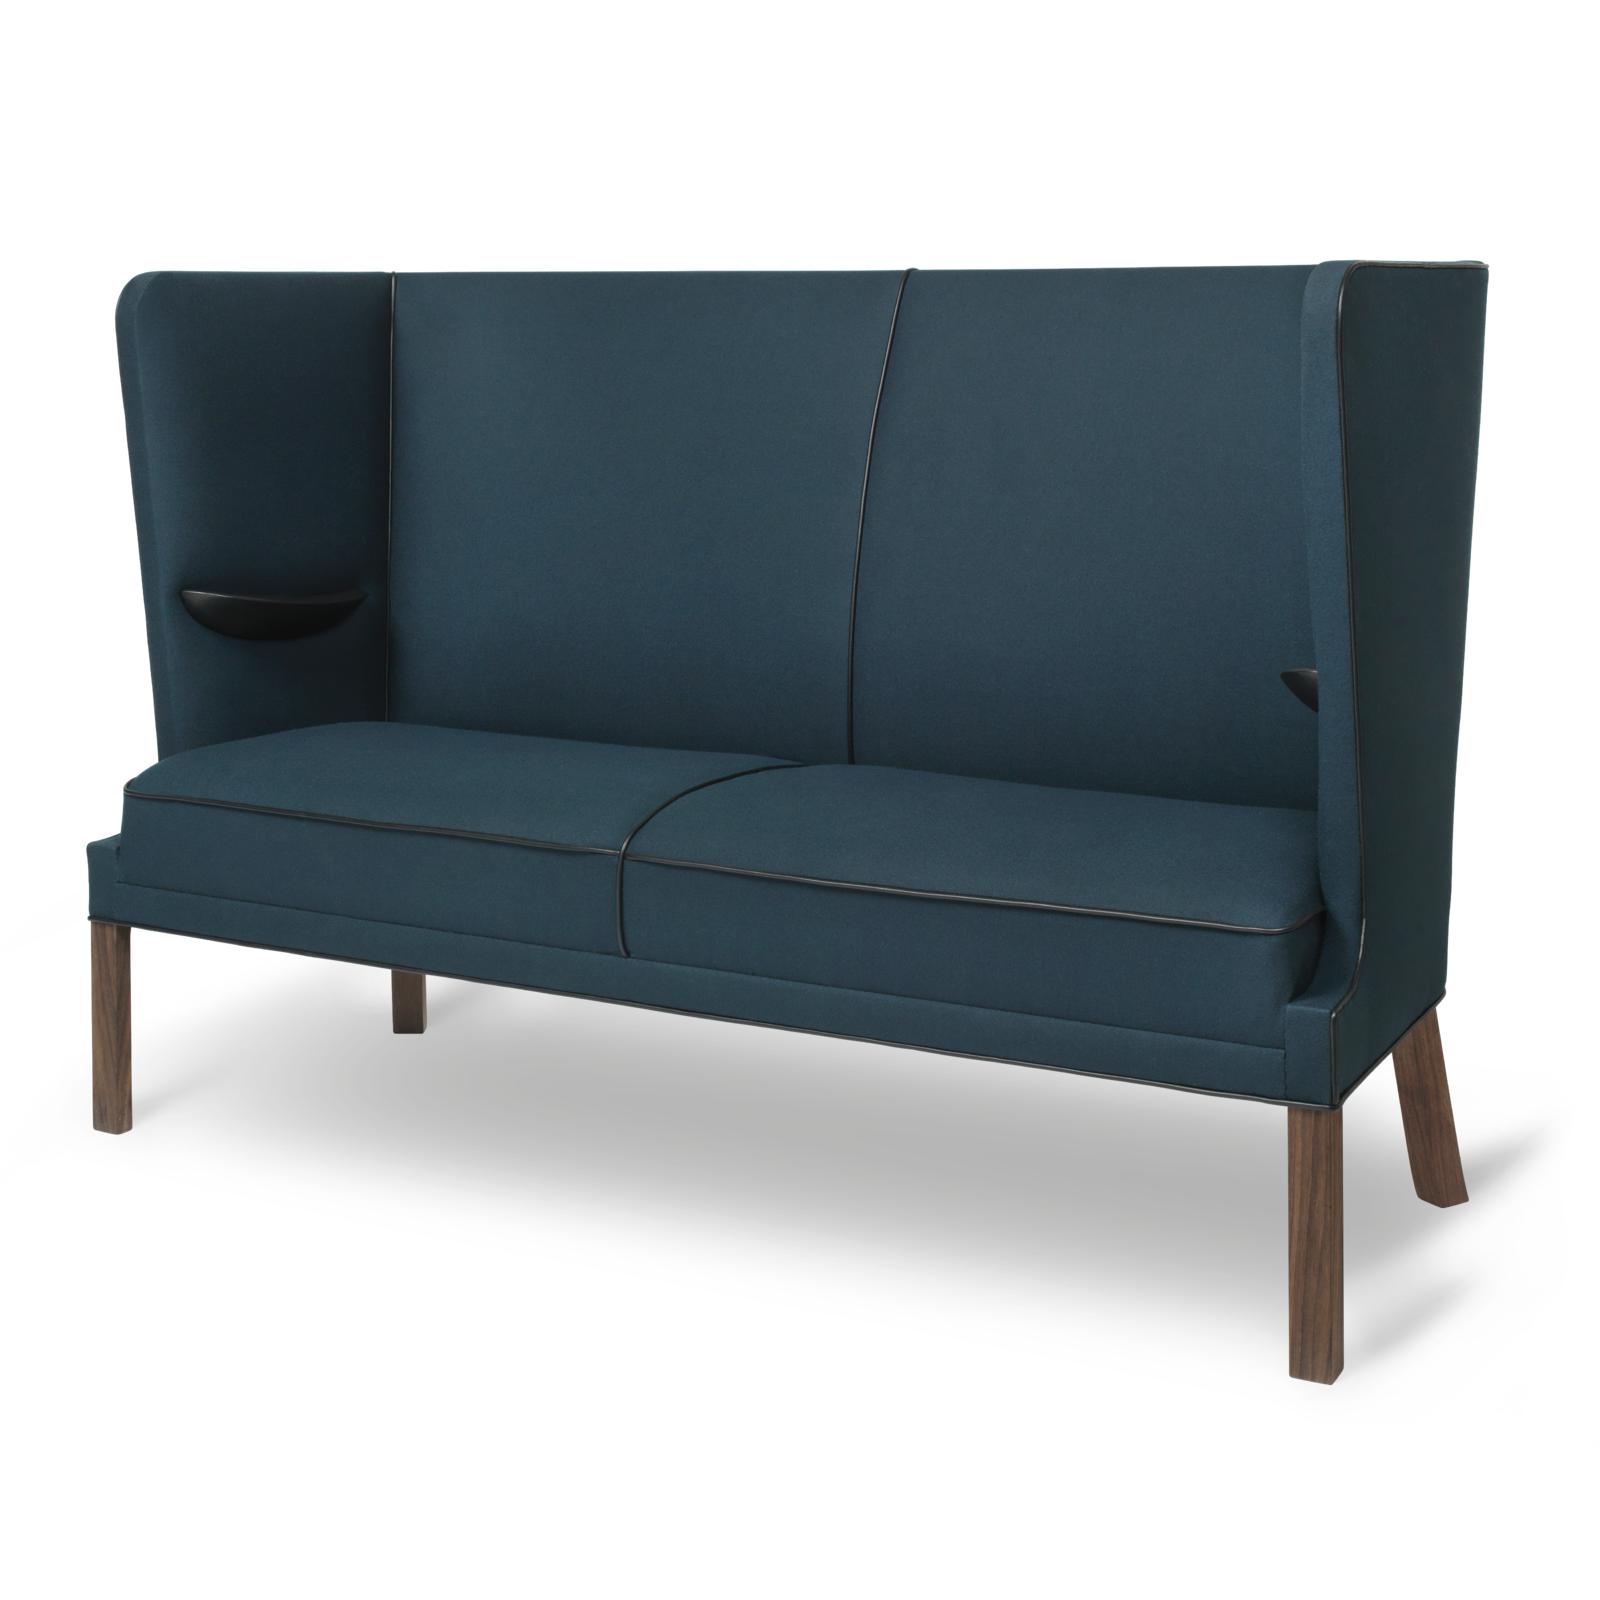 Carl Hansen FH436 Coupé divano, tessuto noce o blu oliato